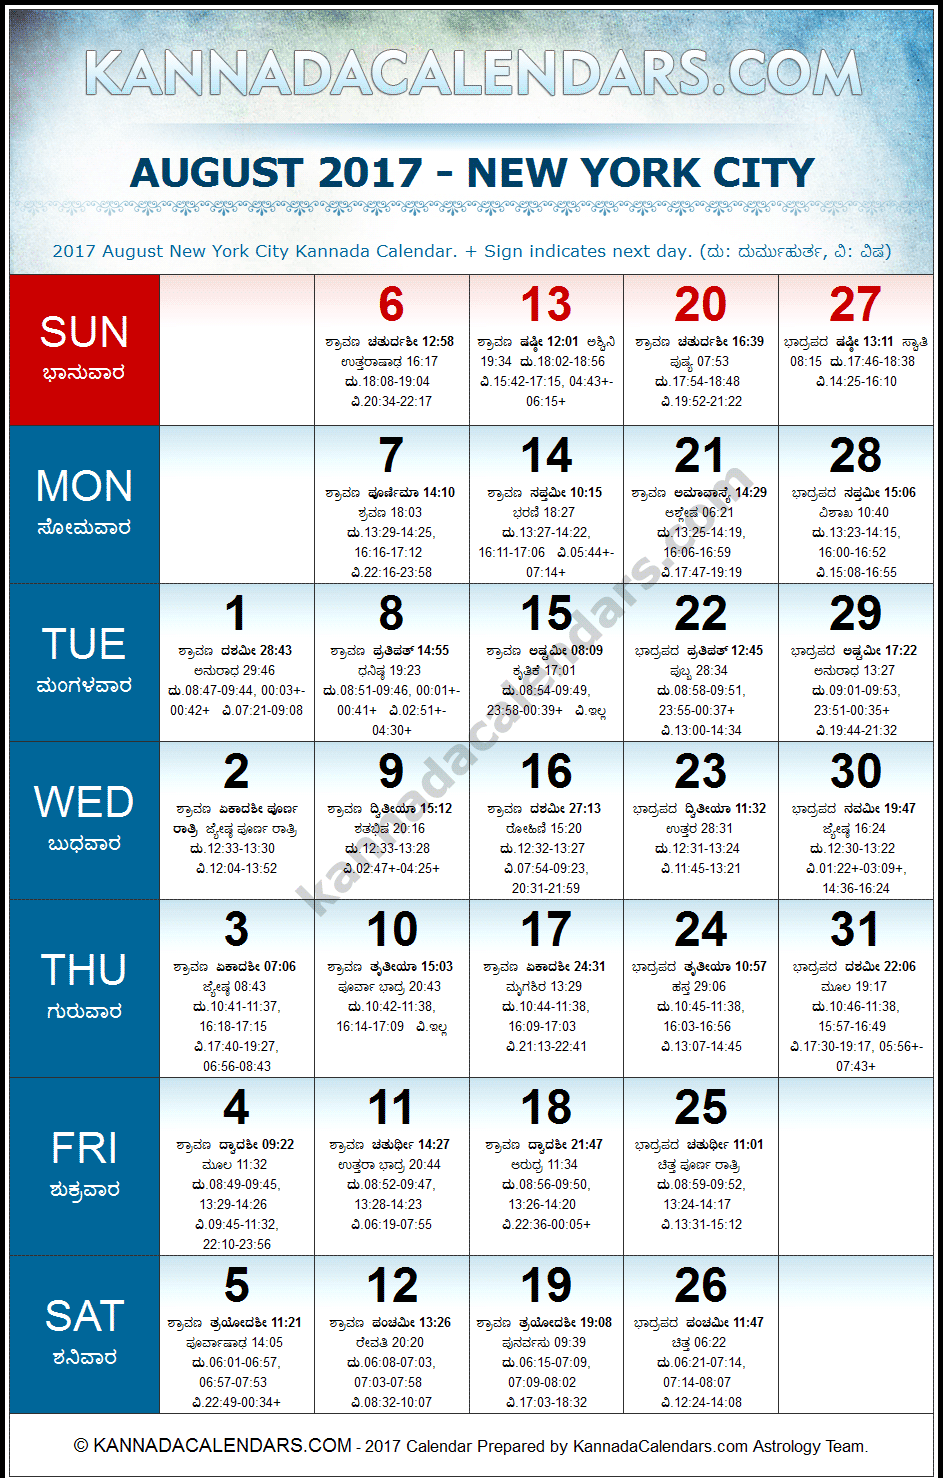 August 2017 Kannada Calendar for New York, USA